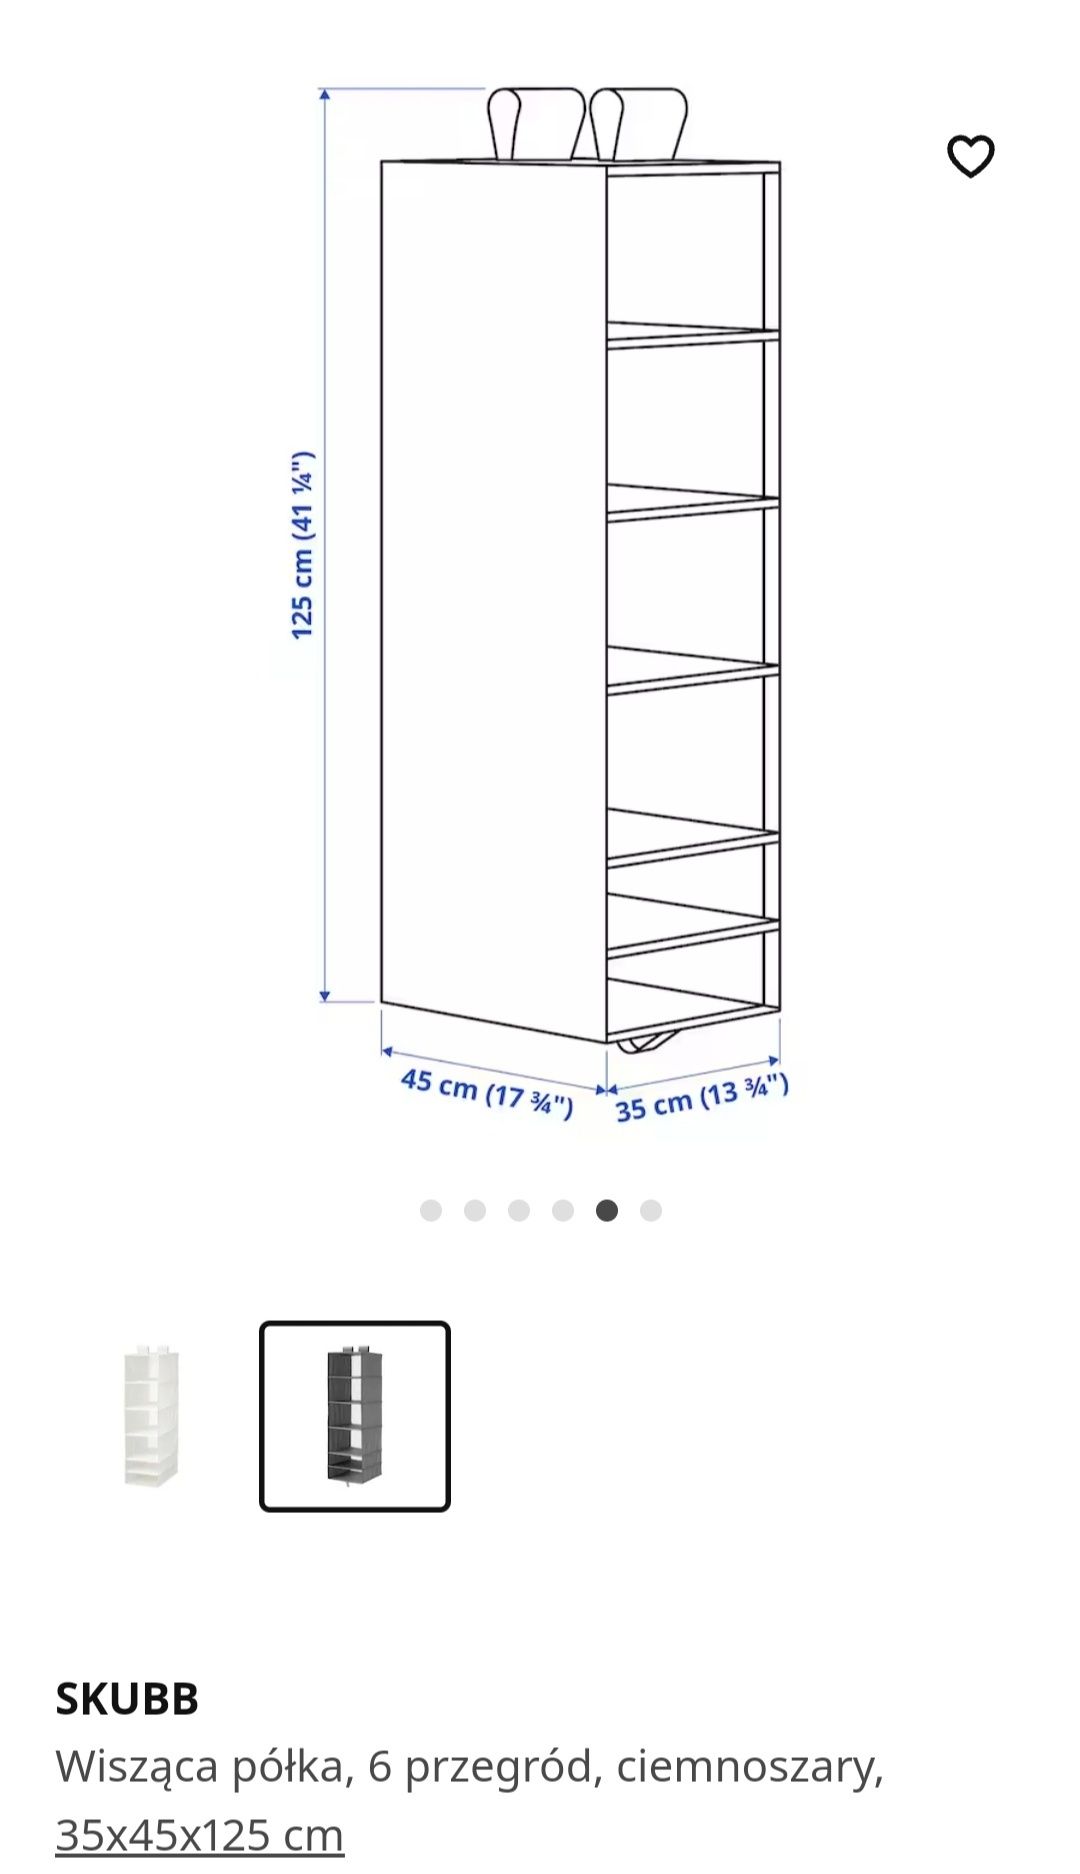 Wisząca półka do szafy SKUBB Ikea